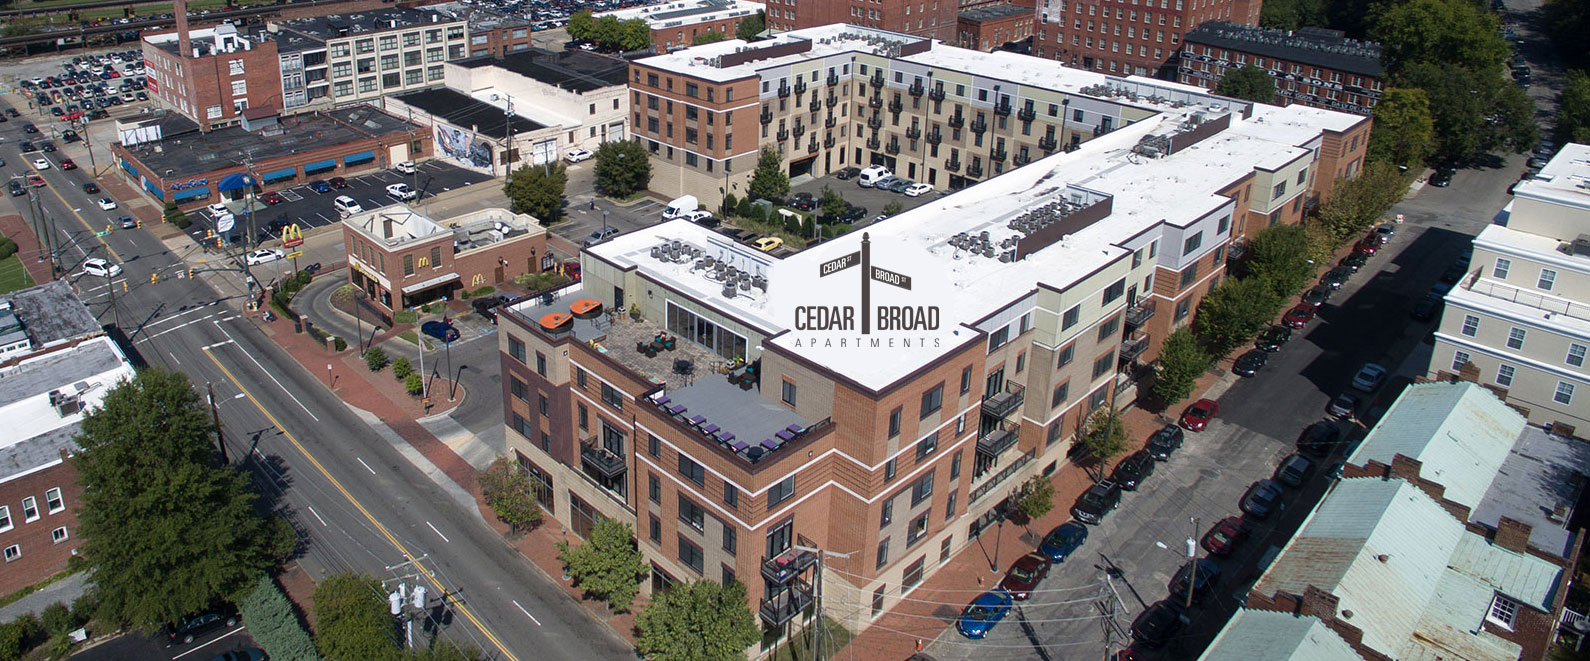 Cedar Broad Apartments